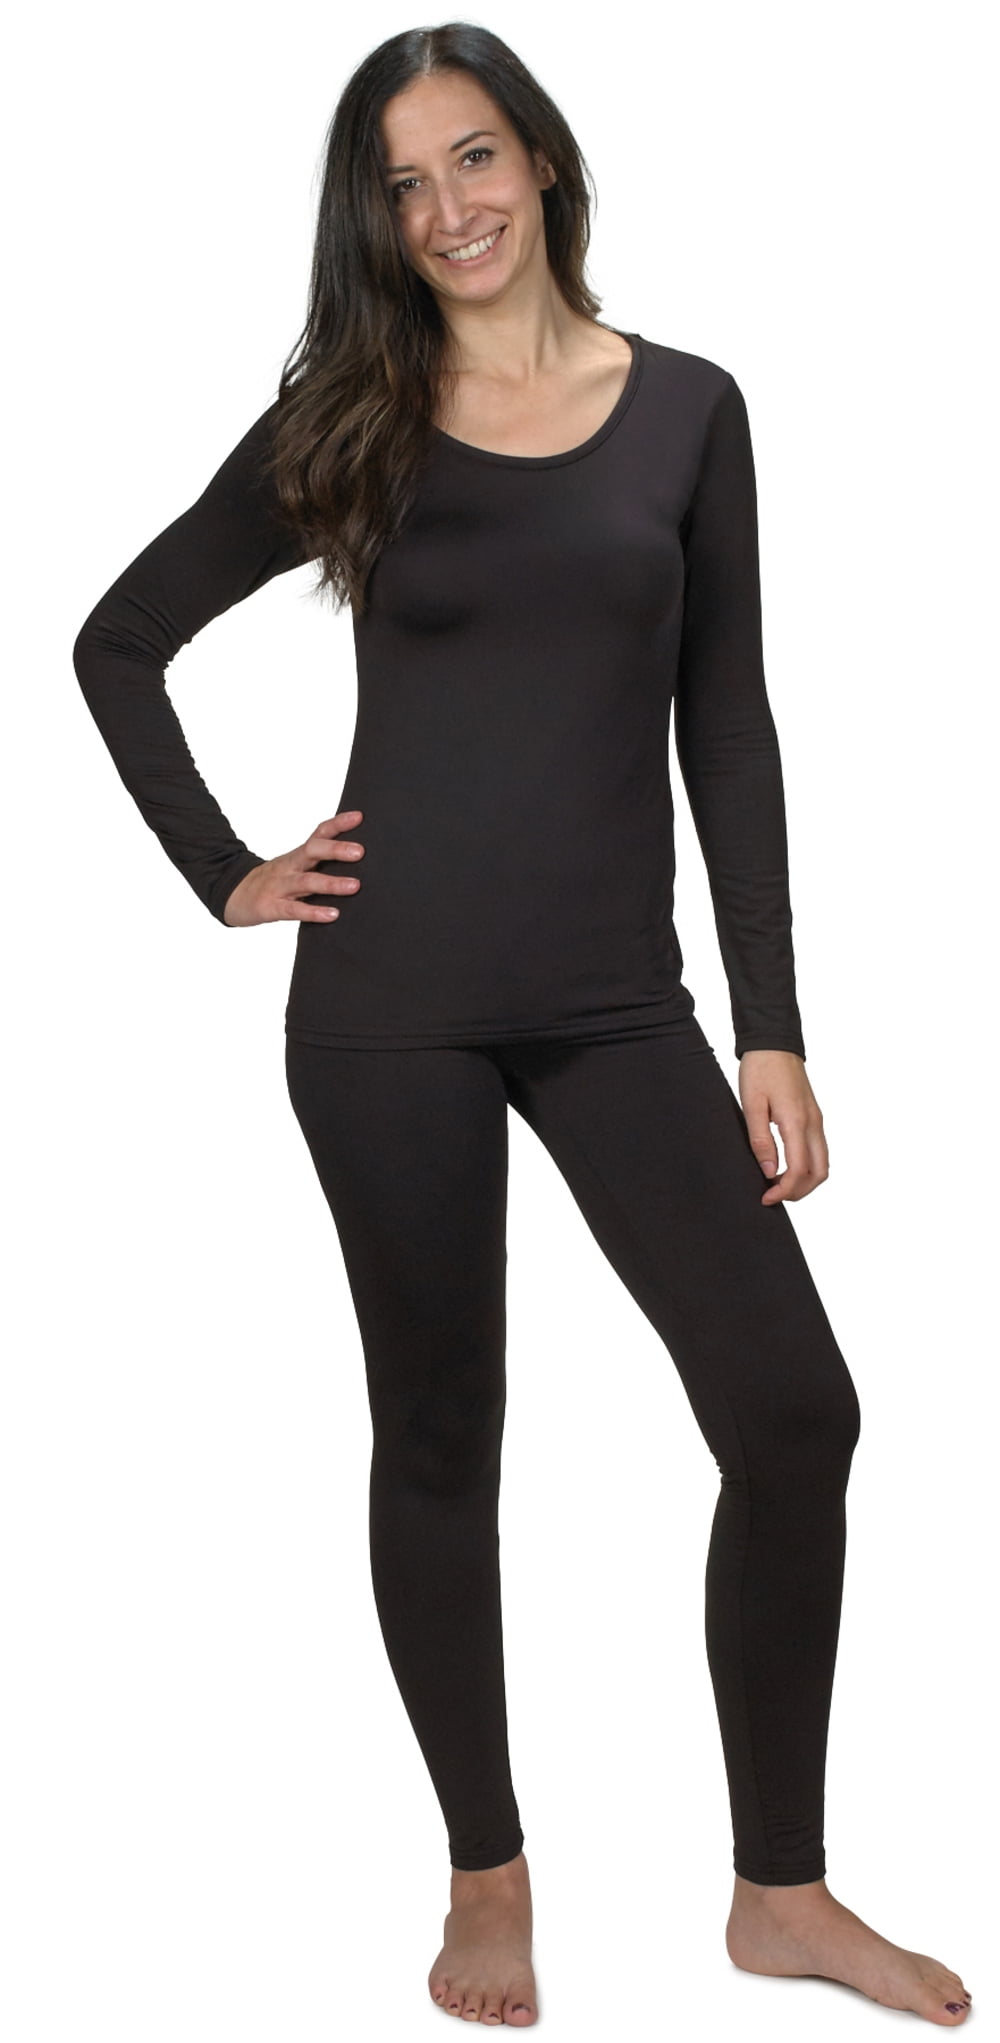 Thermal Underwear Tops for Women Fleece Lined Long Sleeve Slim Base Layer Shirt